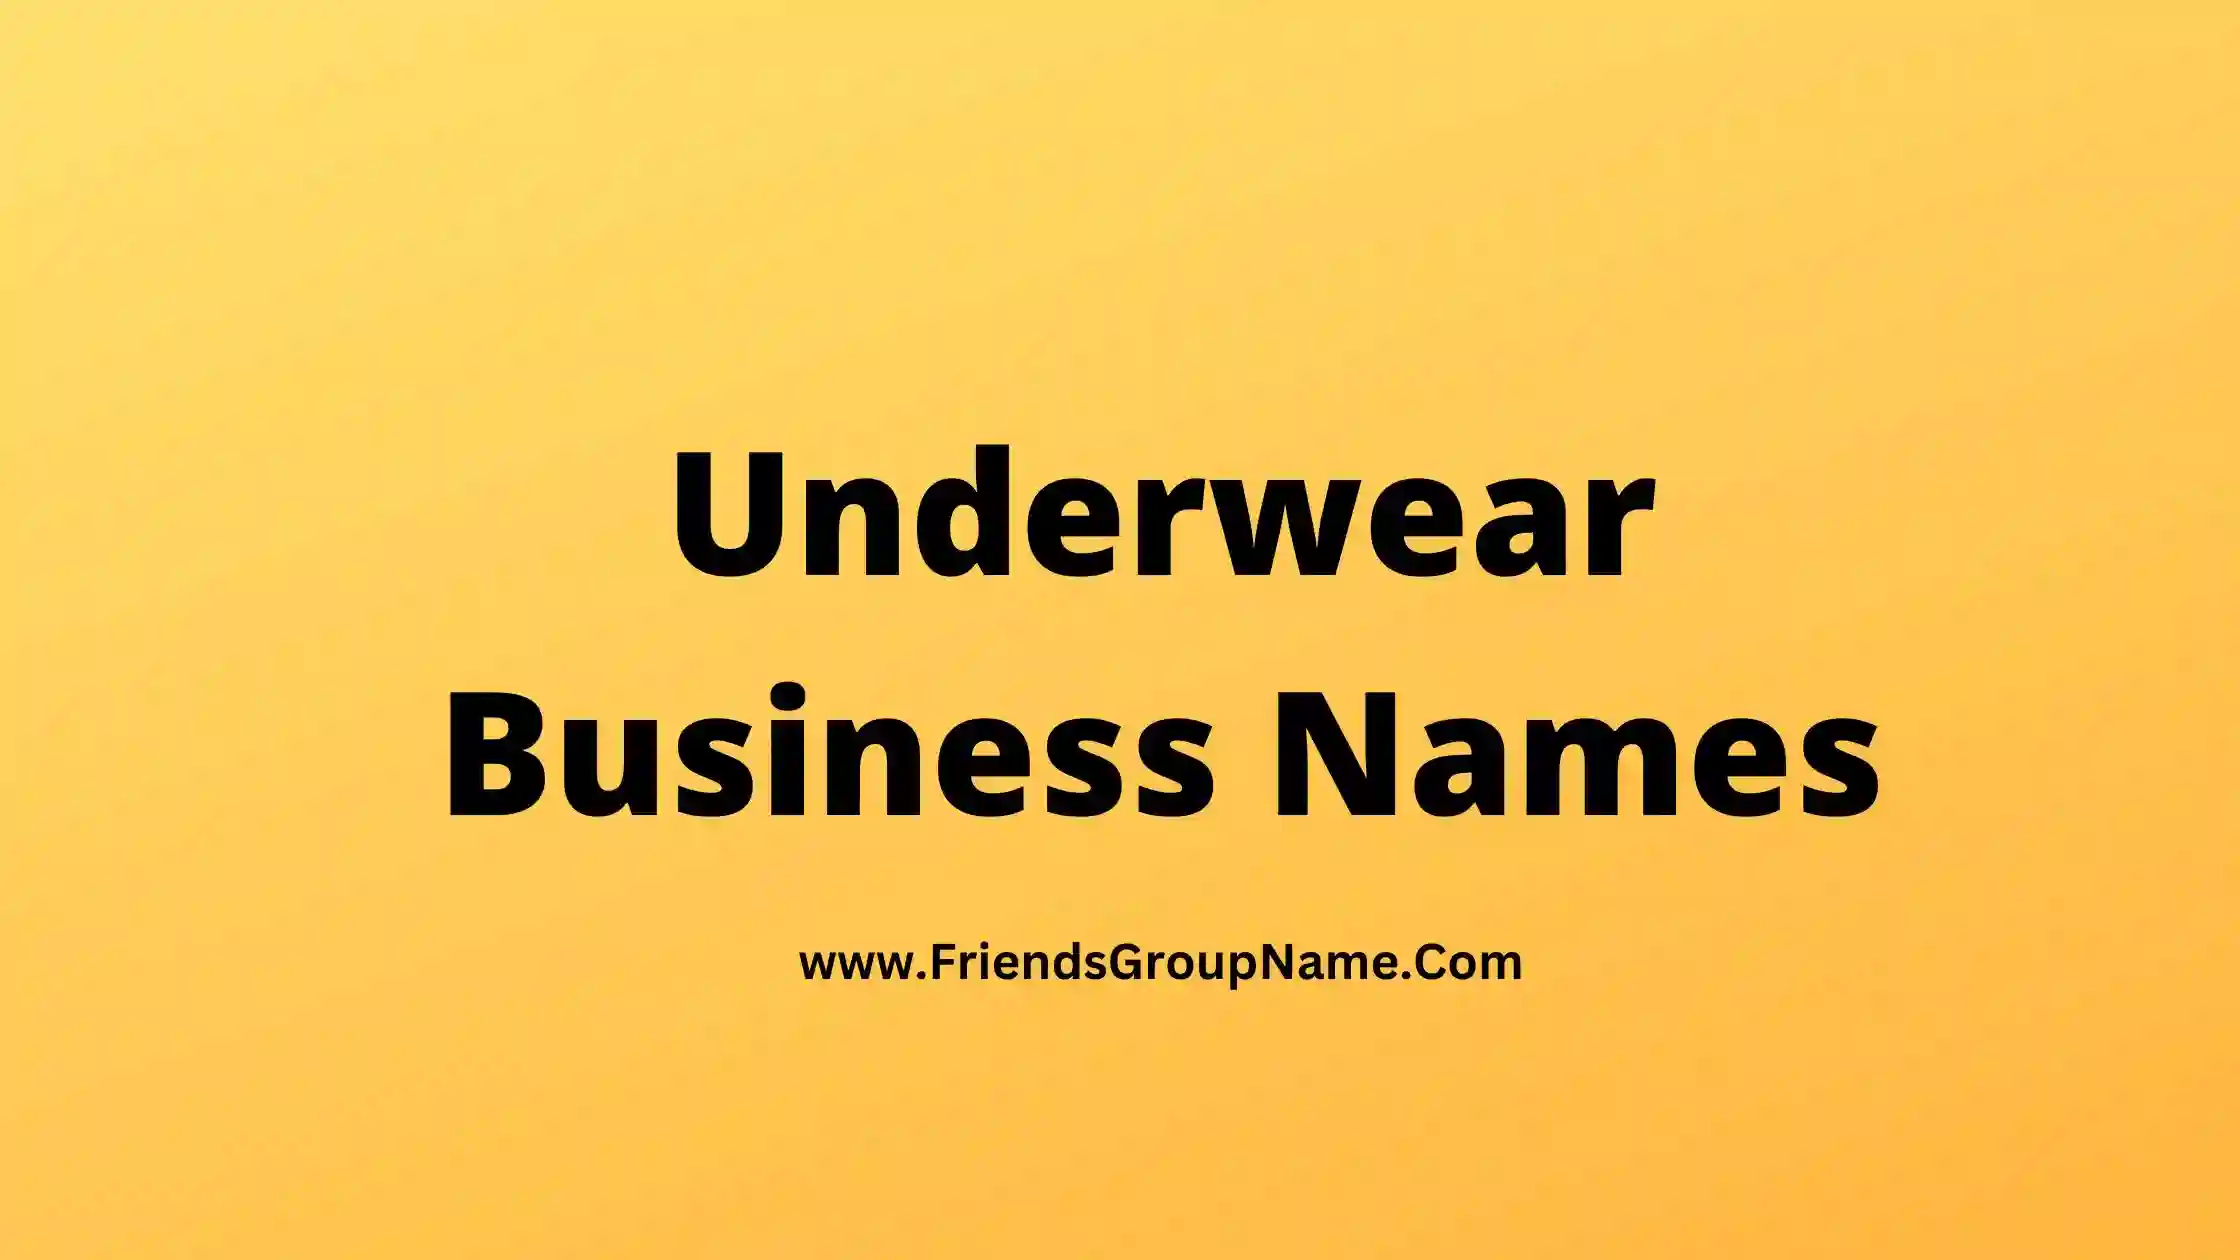 Underwear Business Names, Business Names For Underwear